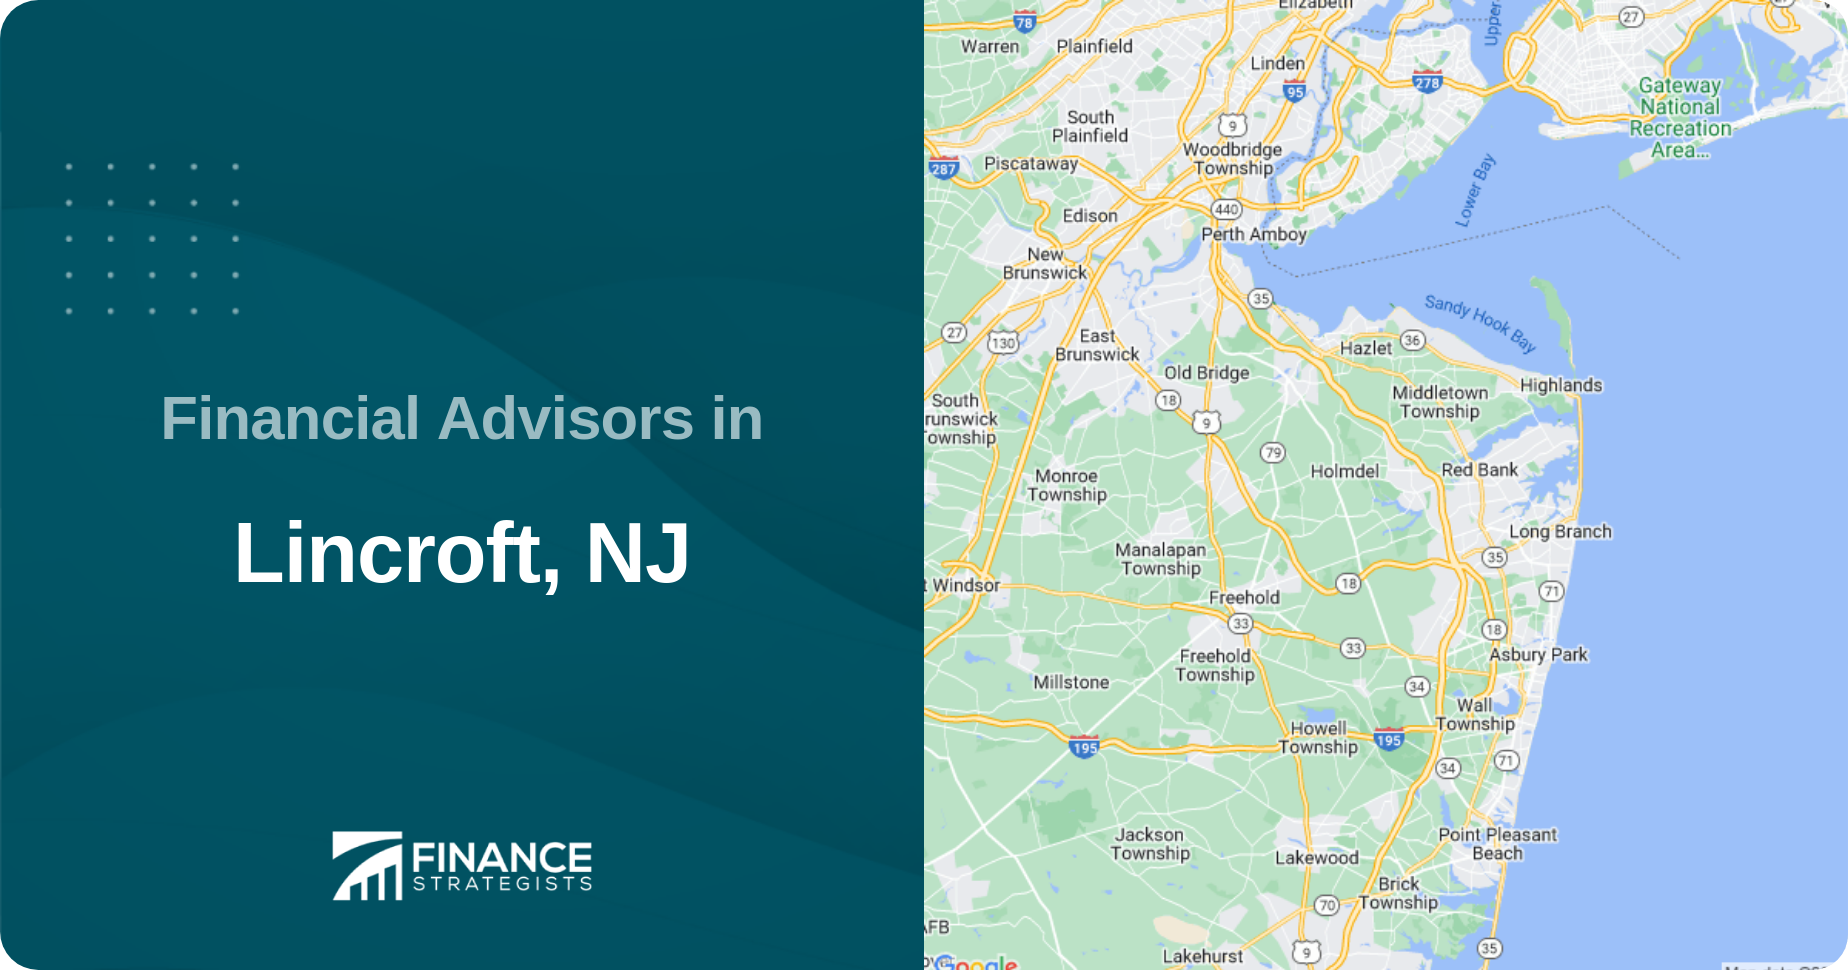 Financial Advisors in Lincroft, NJ